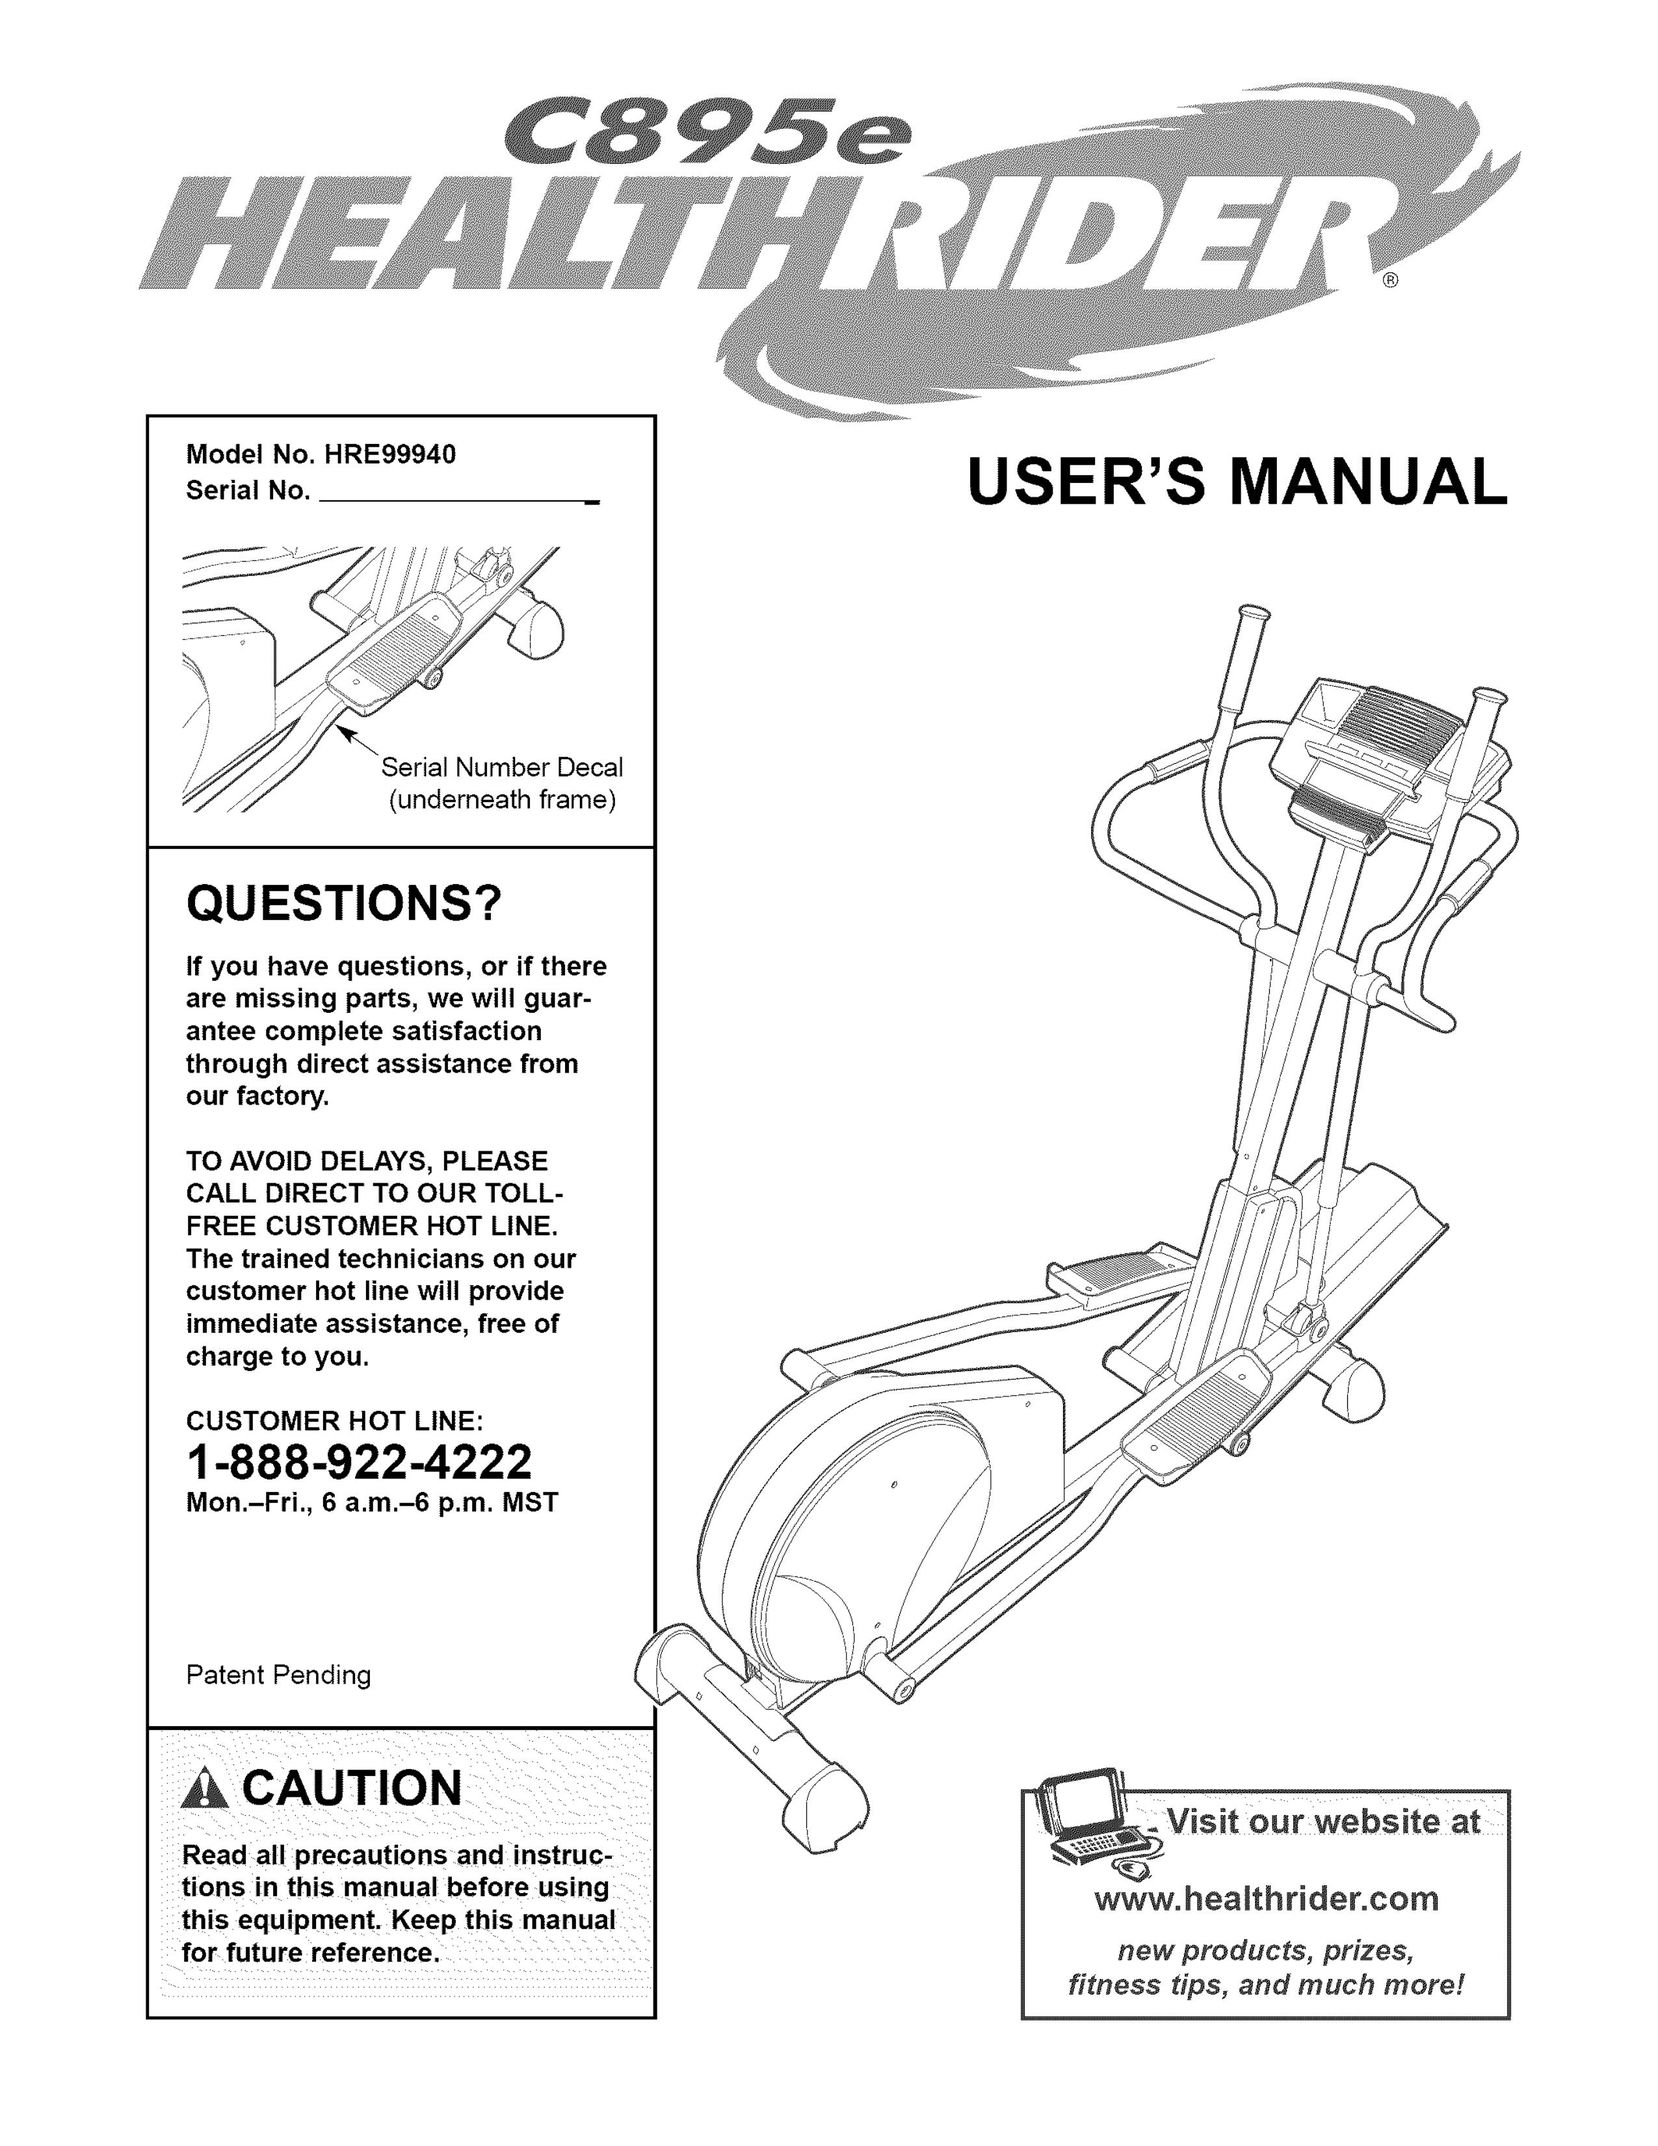 Healthrider HRE99940 Elliptical Trainer User Manual